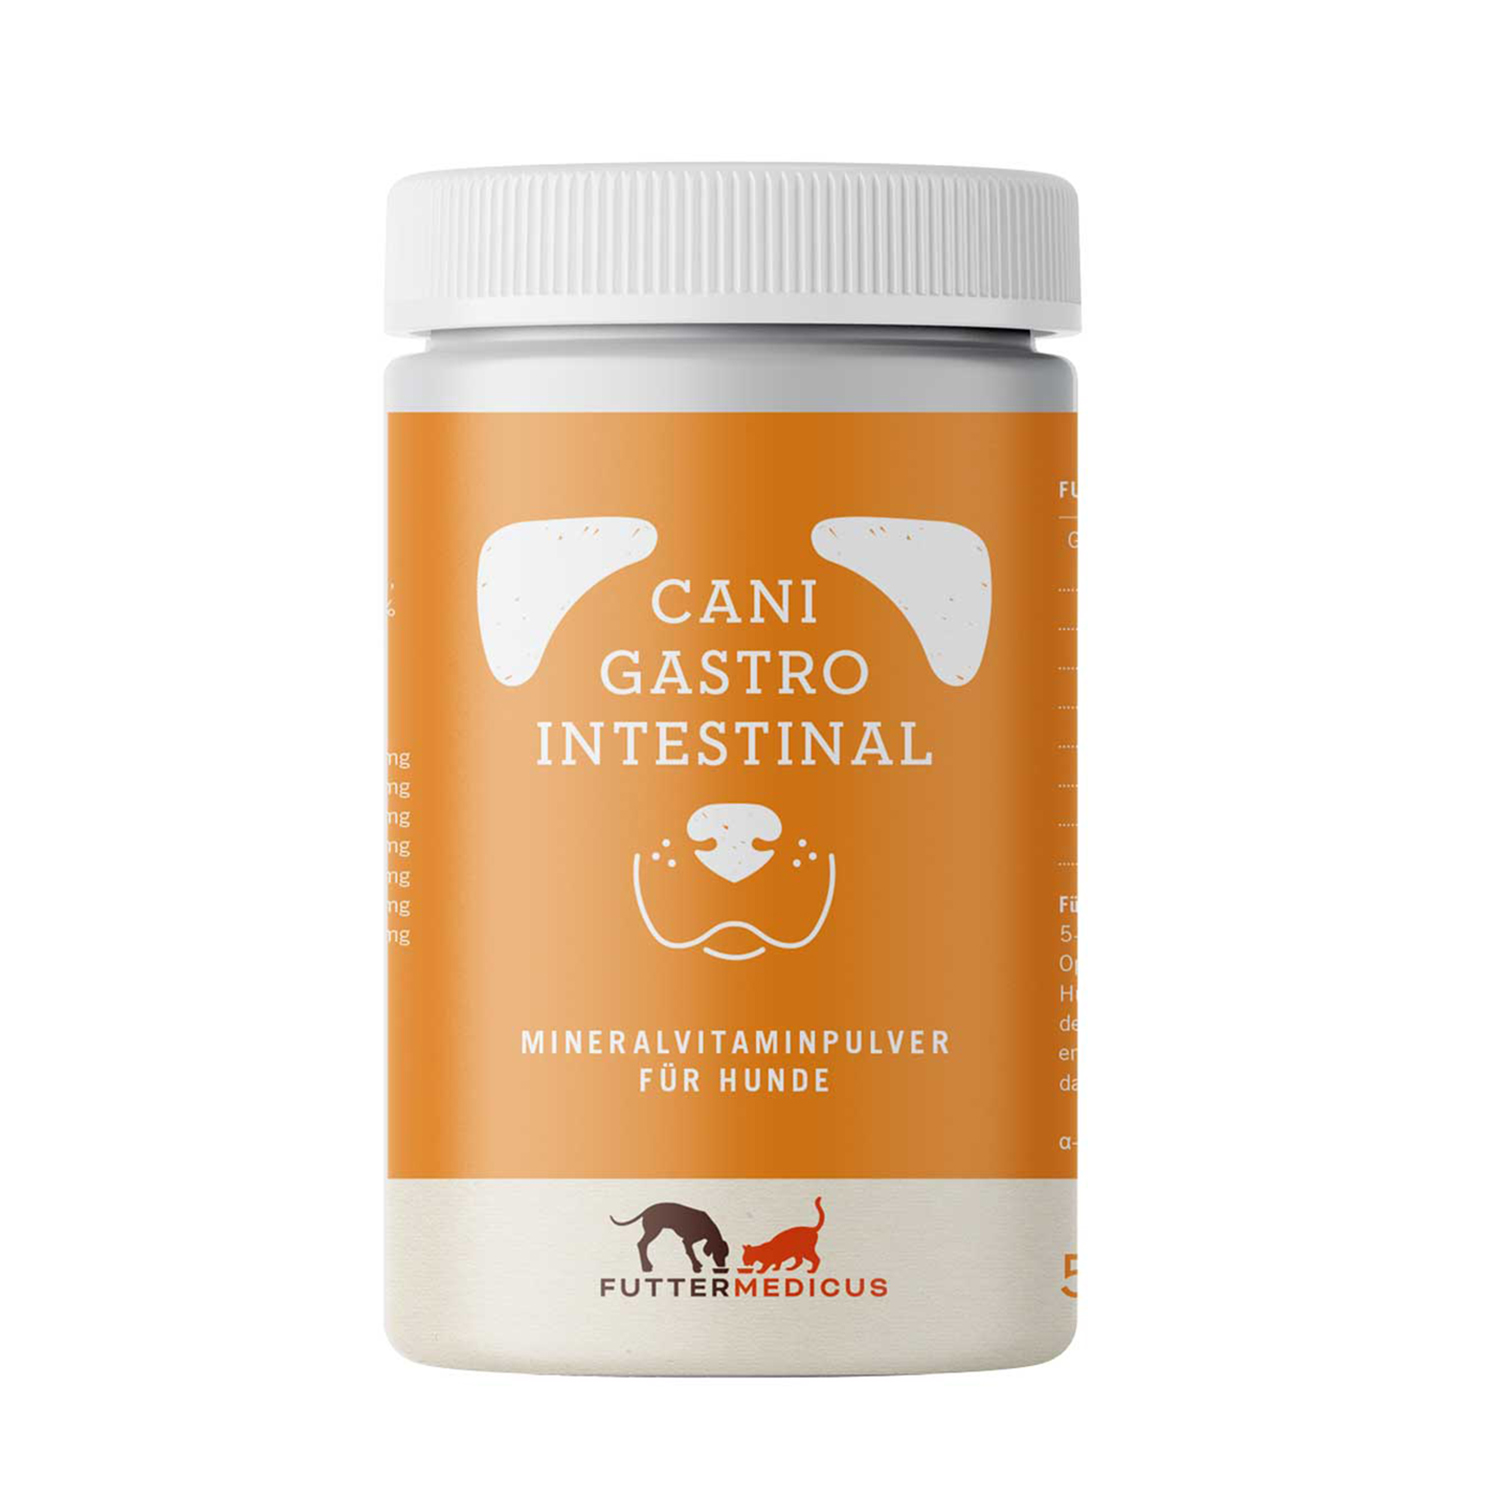 Cani Gastro Intestinal von Futtermedicus – 500g